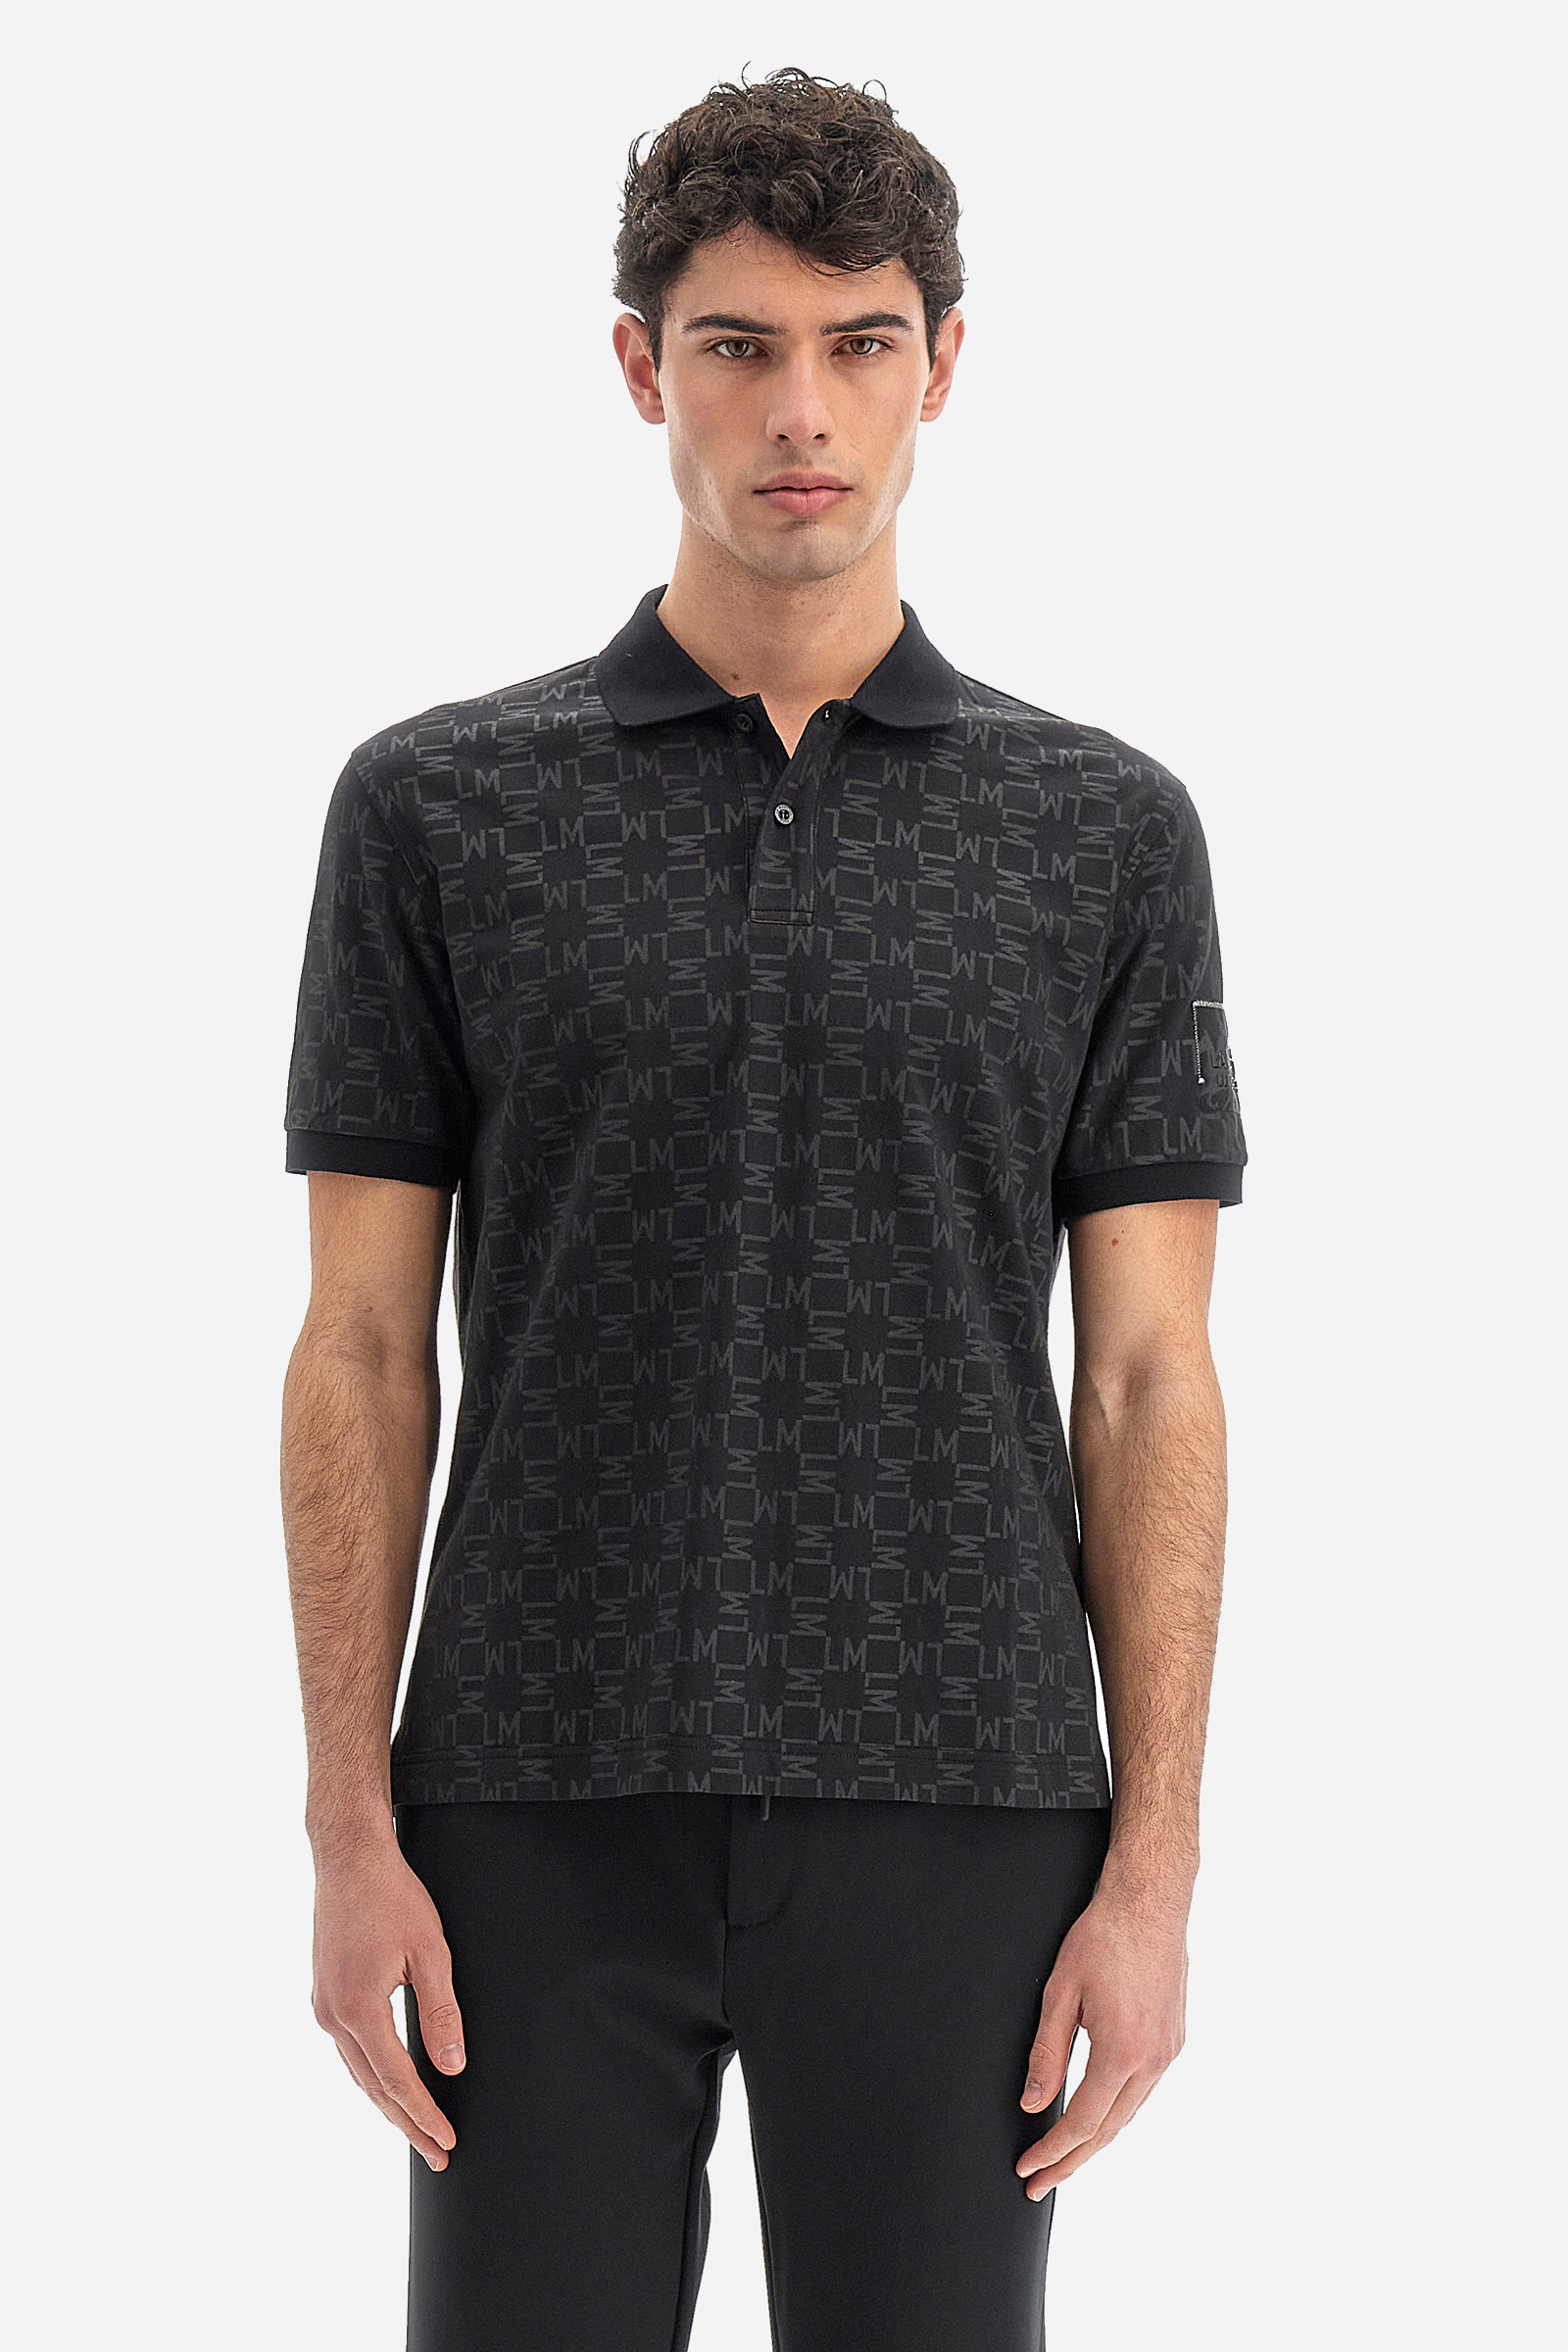 Louis Vuitton Tweed Monogram Polo Shirts